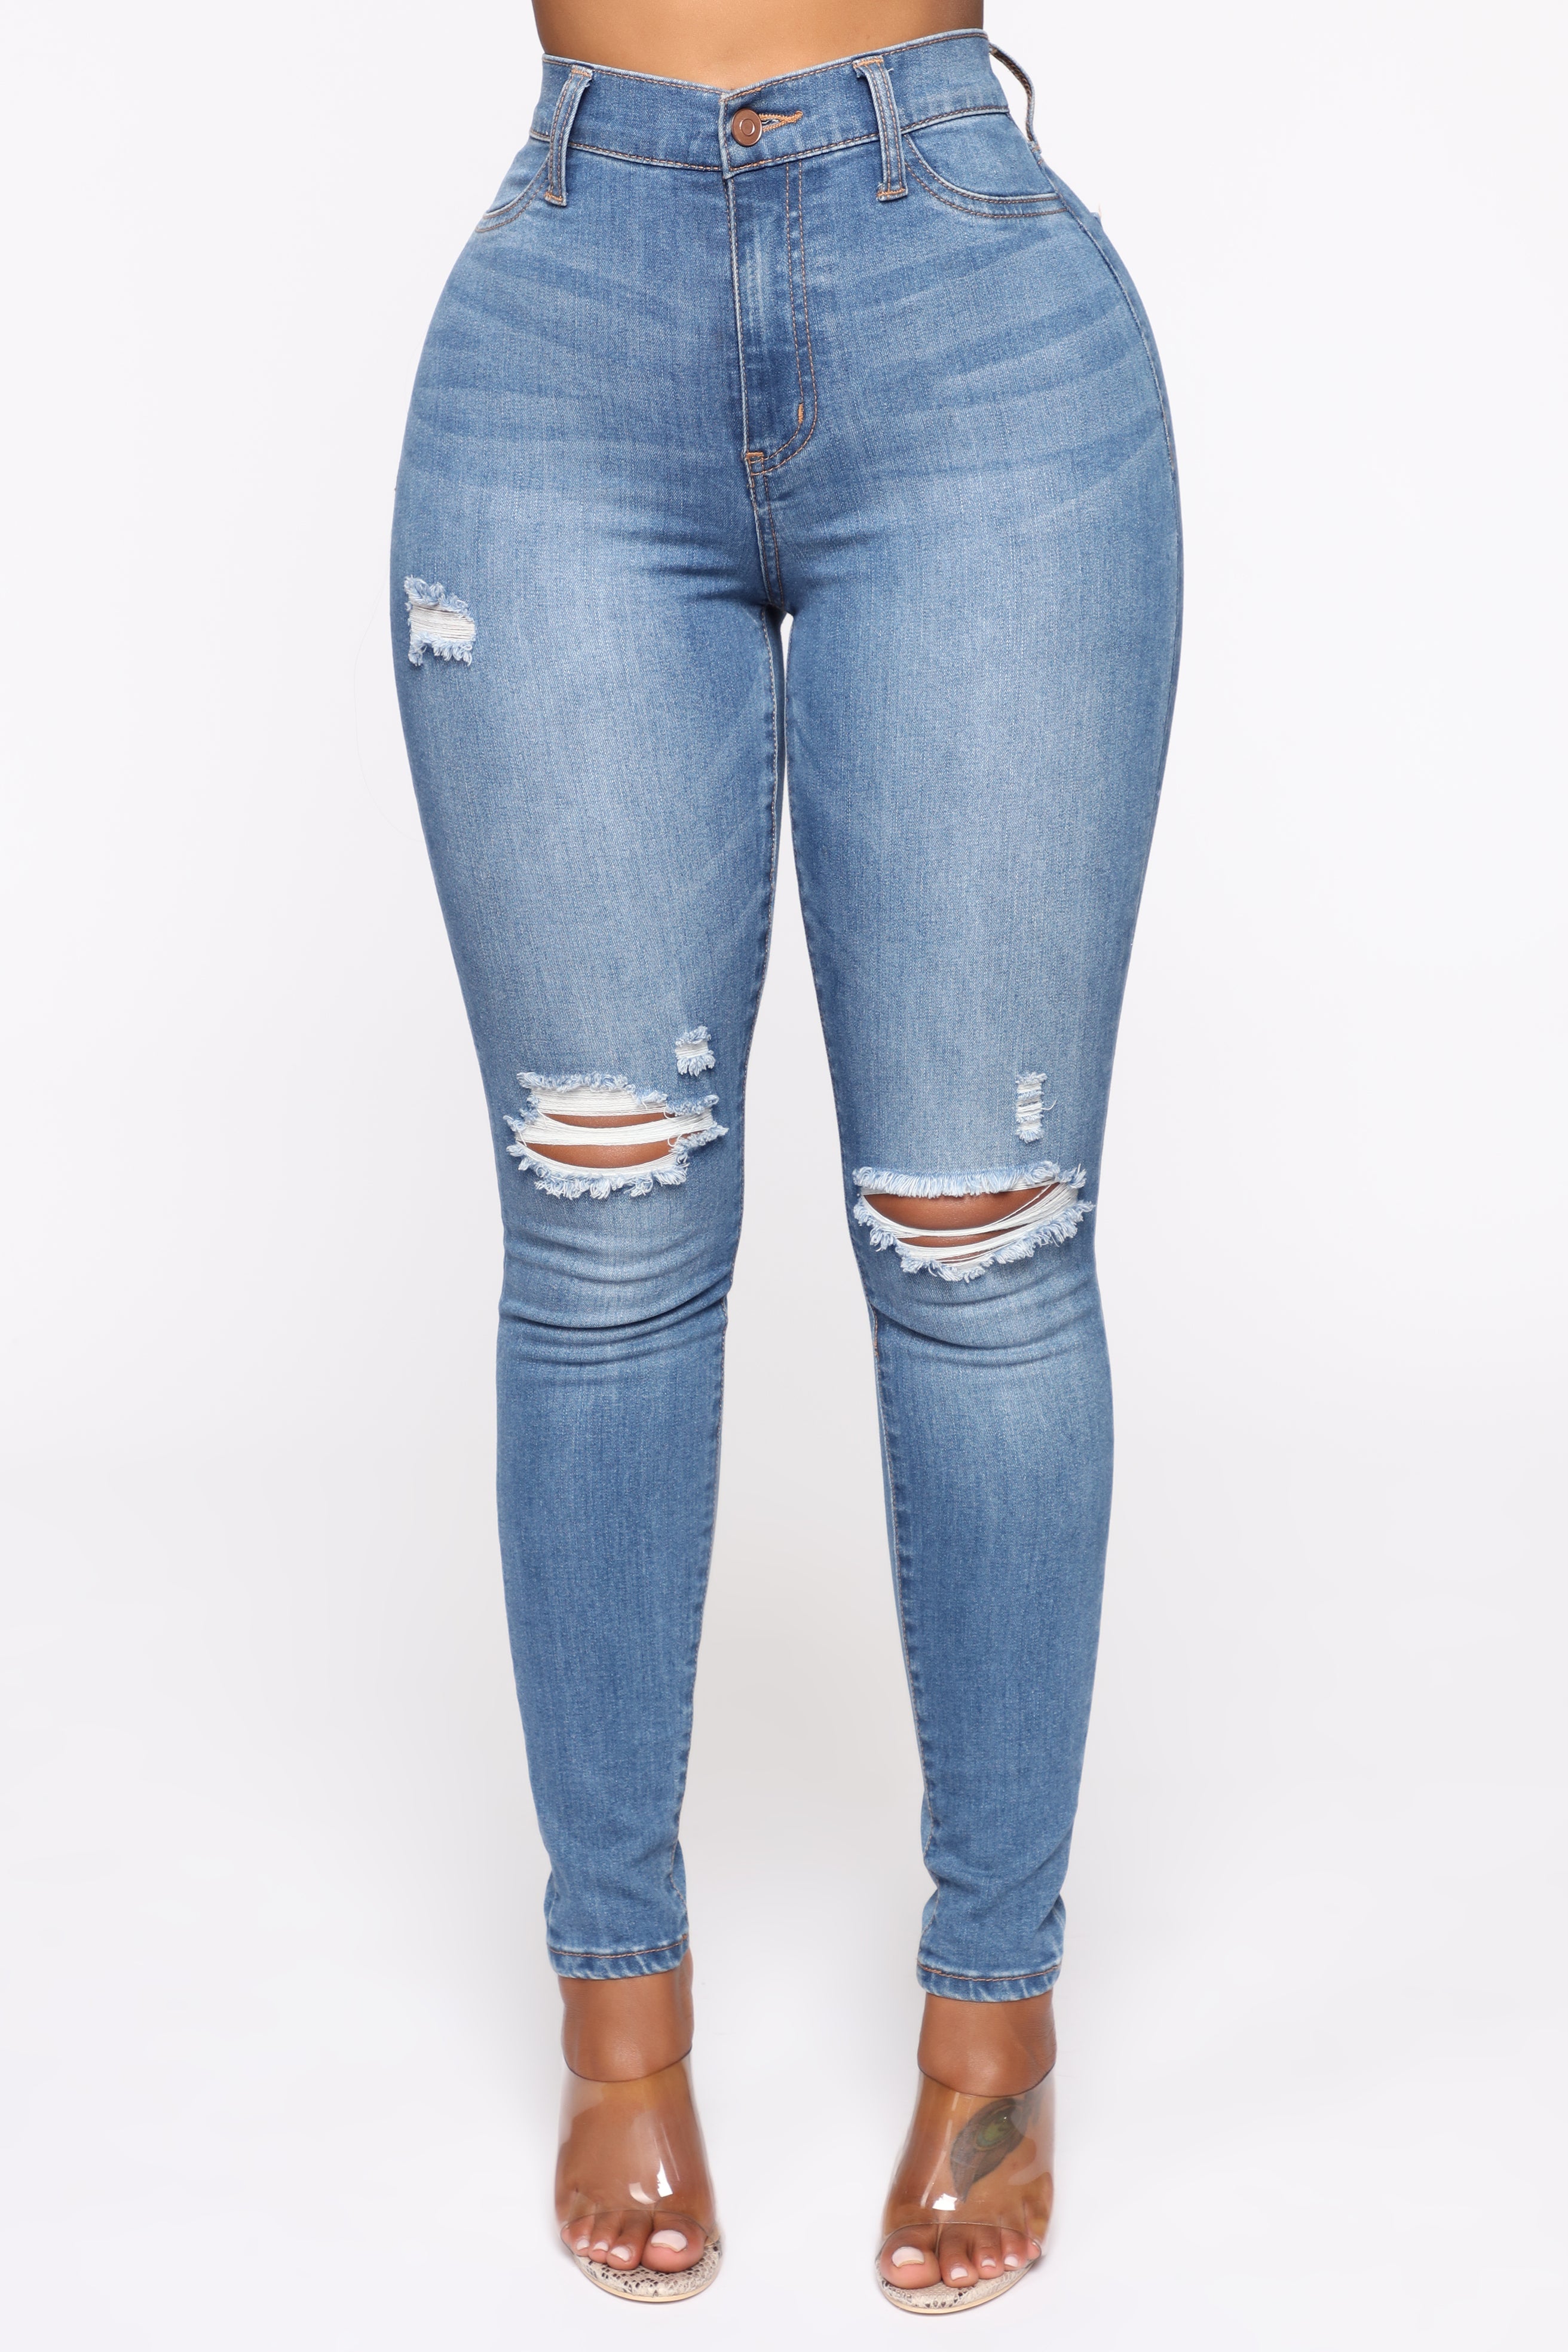 Our Favorite High Rise Skinny Jeans - Medium Blue Wash – InsStreet